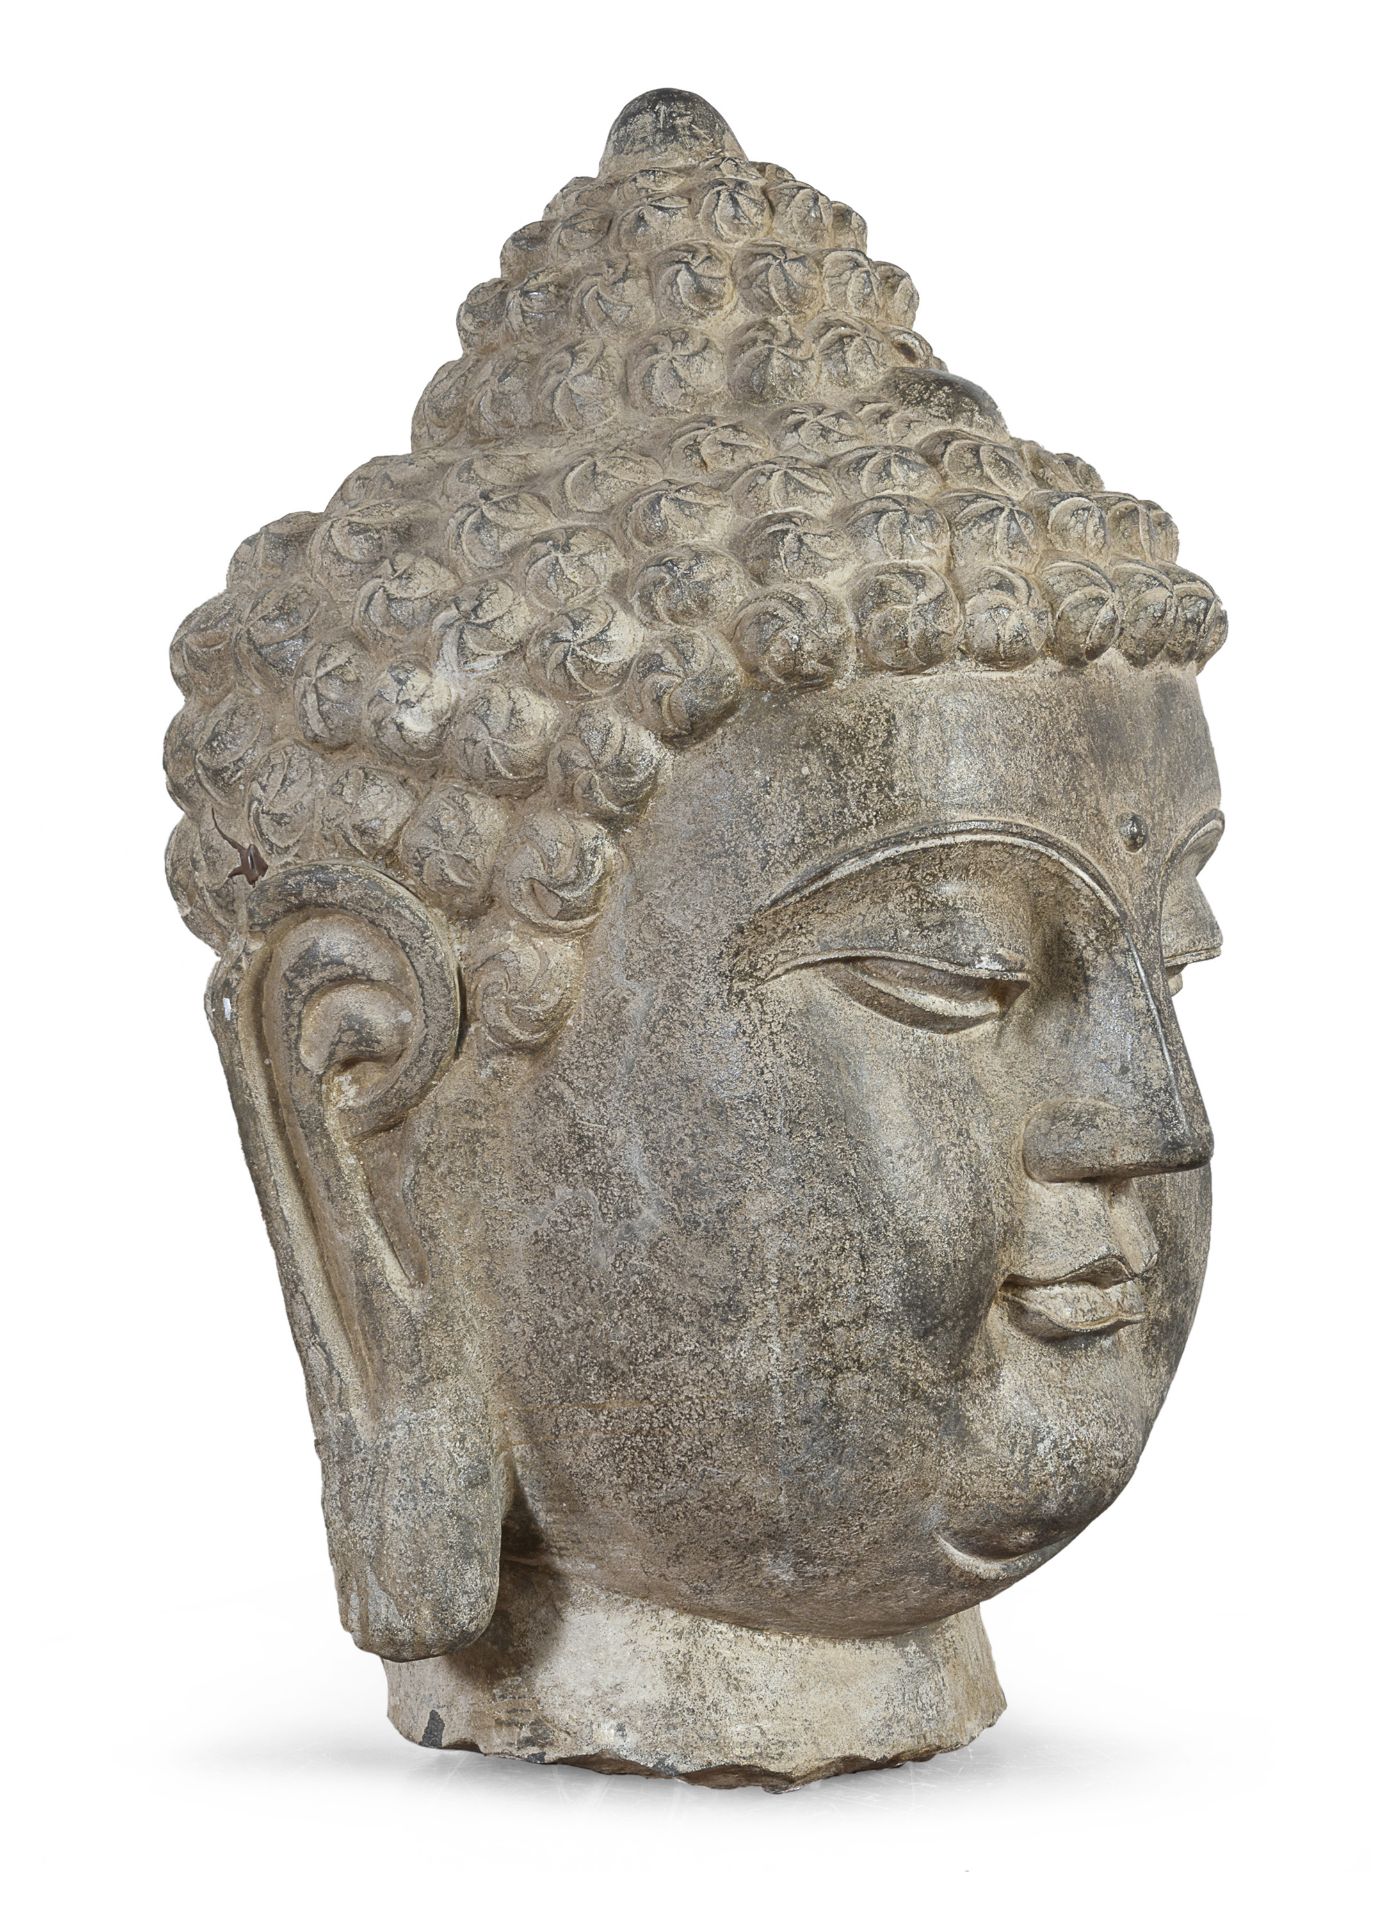 A BIG STONE HEAD OF BUDDHA CHINA 20TH CENTURY - Image 2 of 2